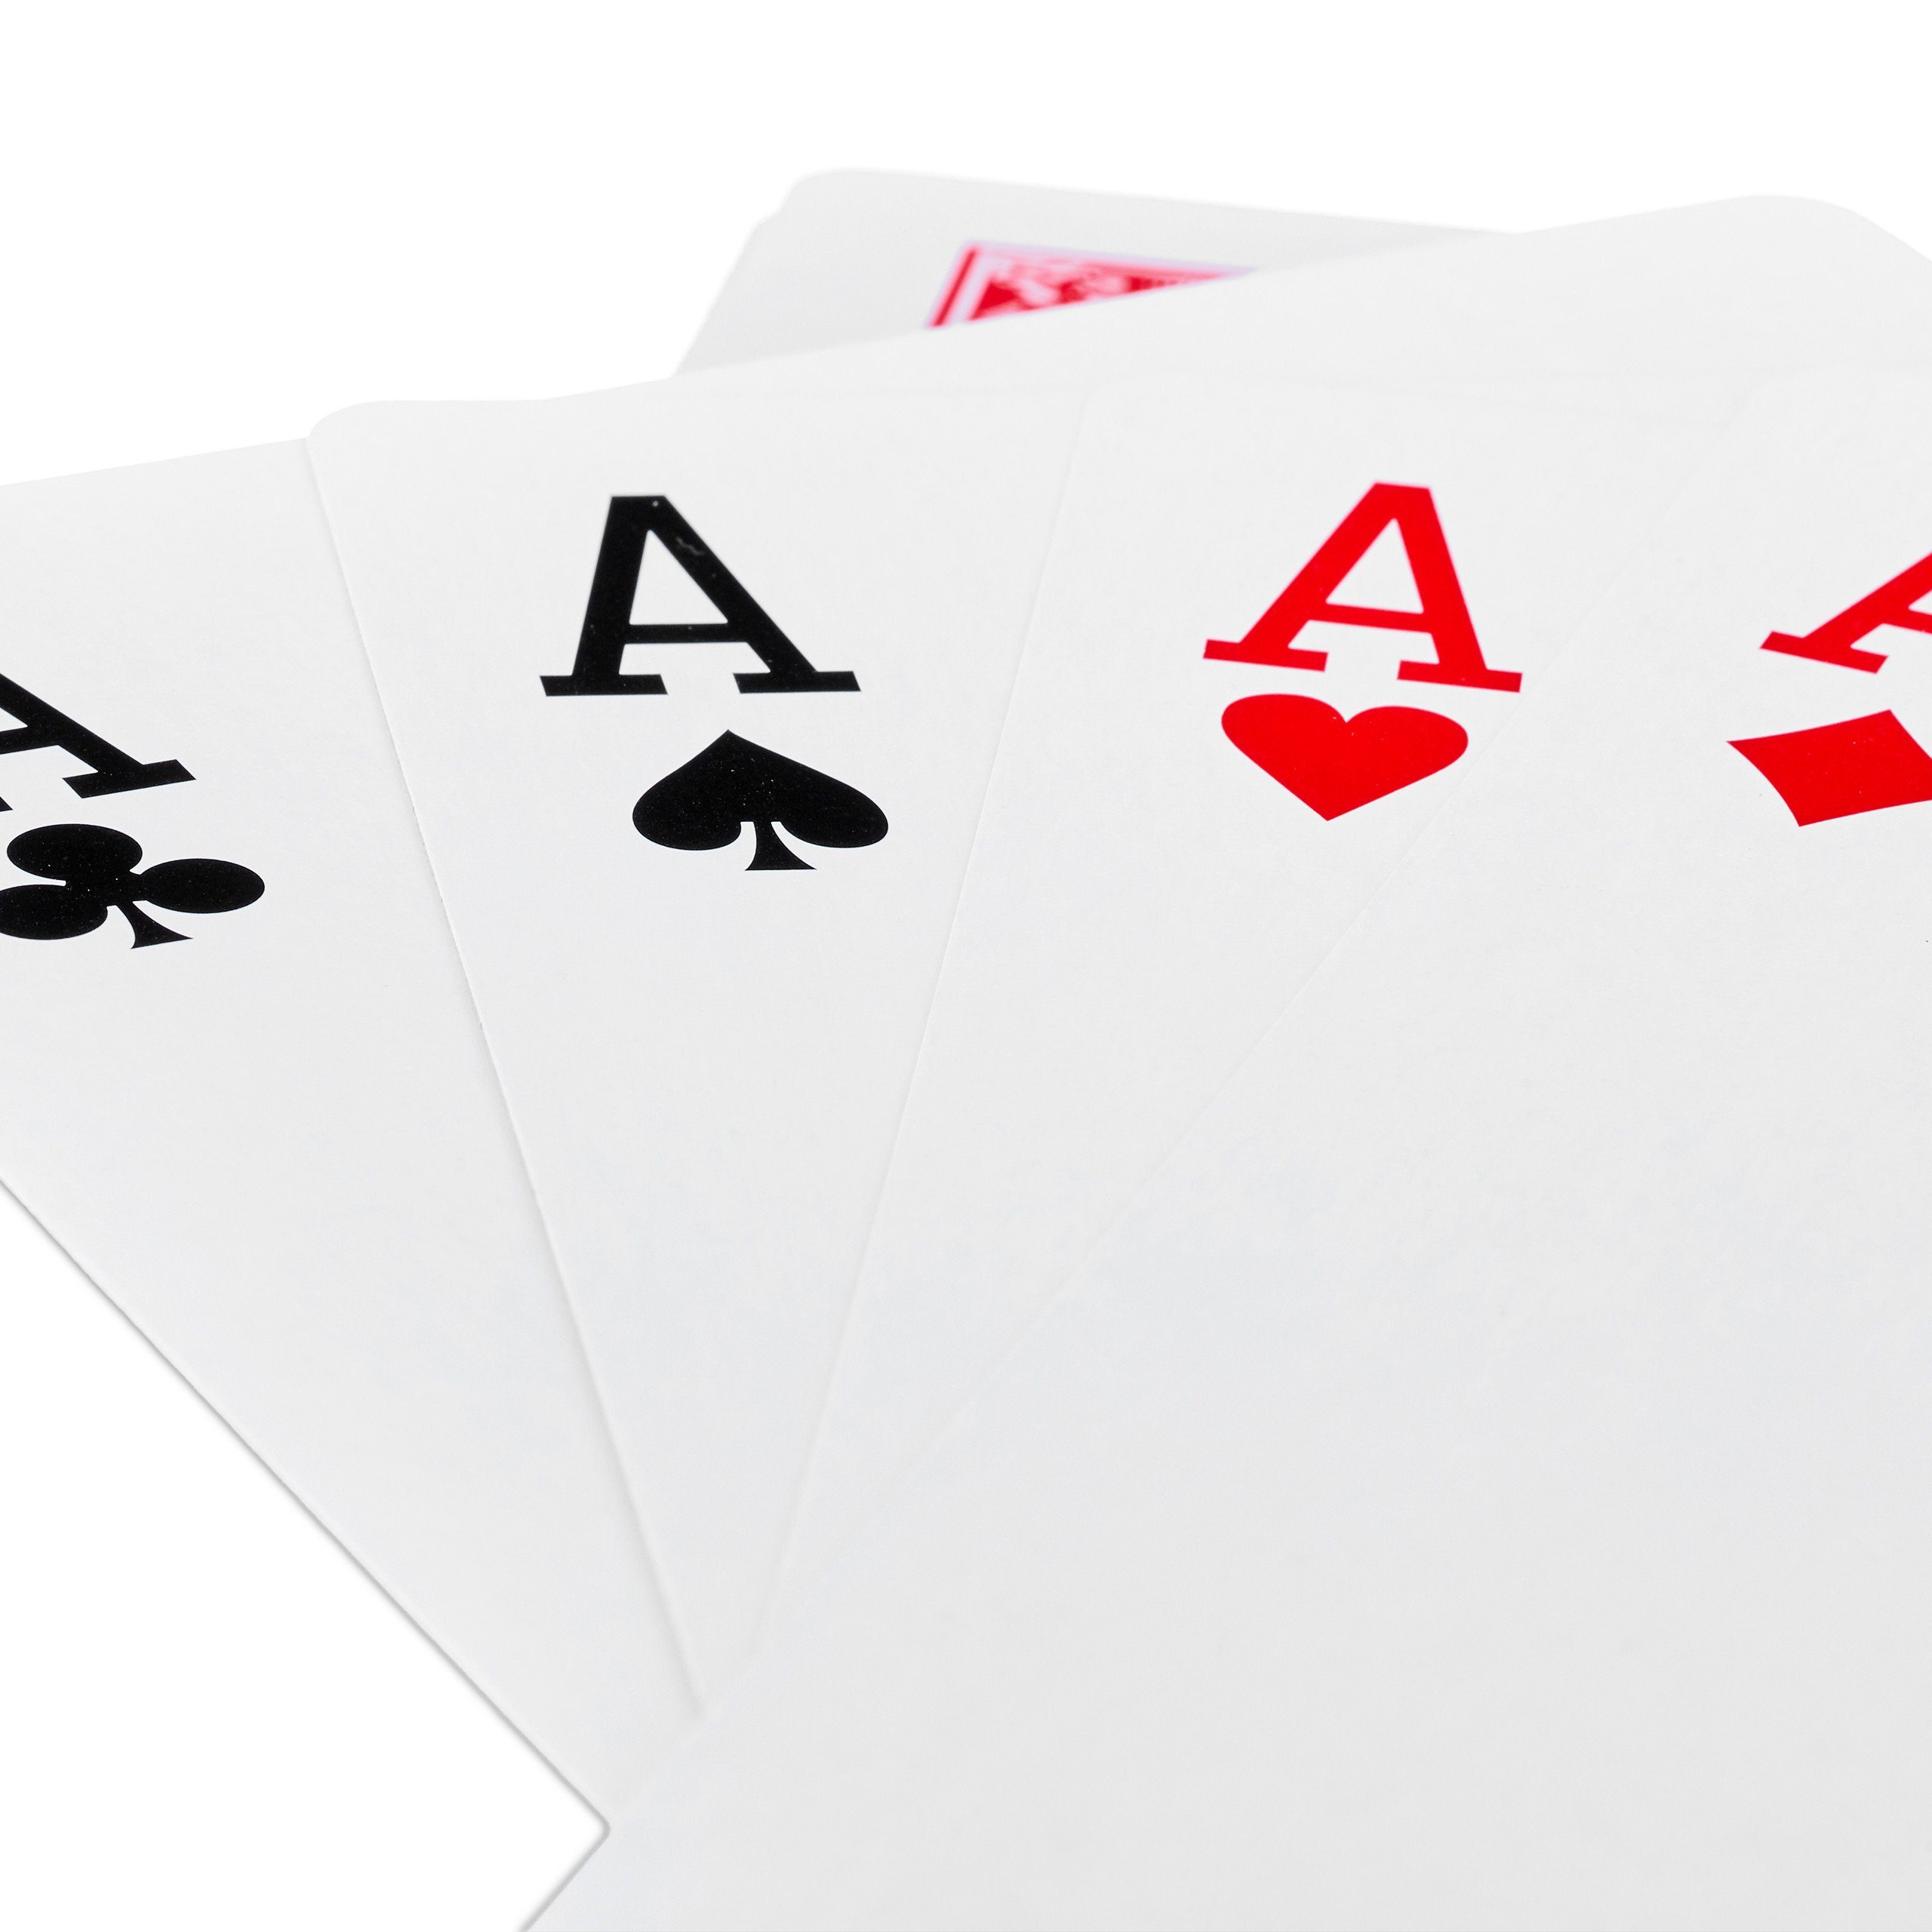 Spiel, relaxdays 2 54 x Pokerkarten Karten Jumbo